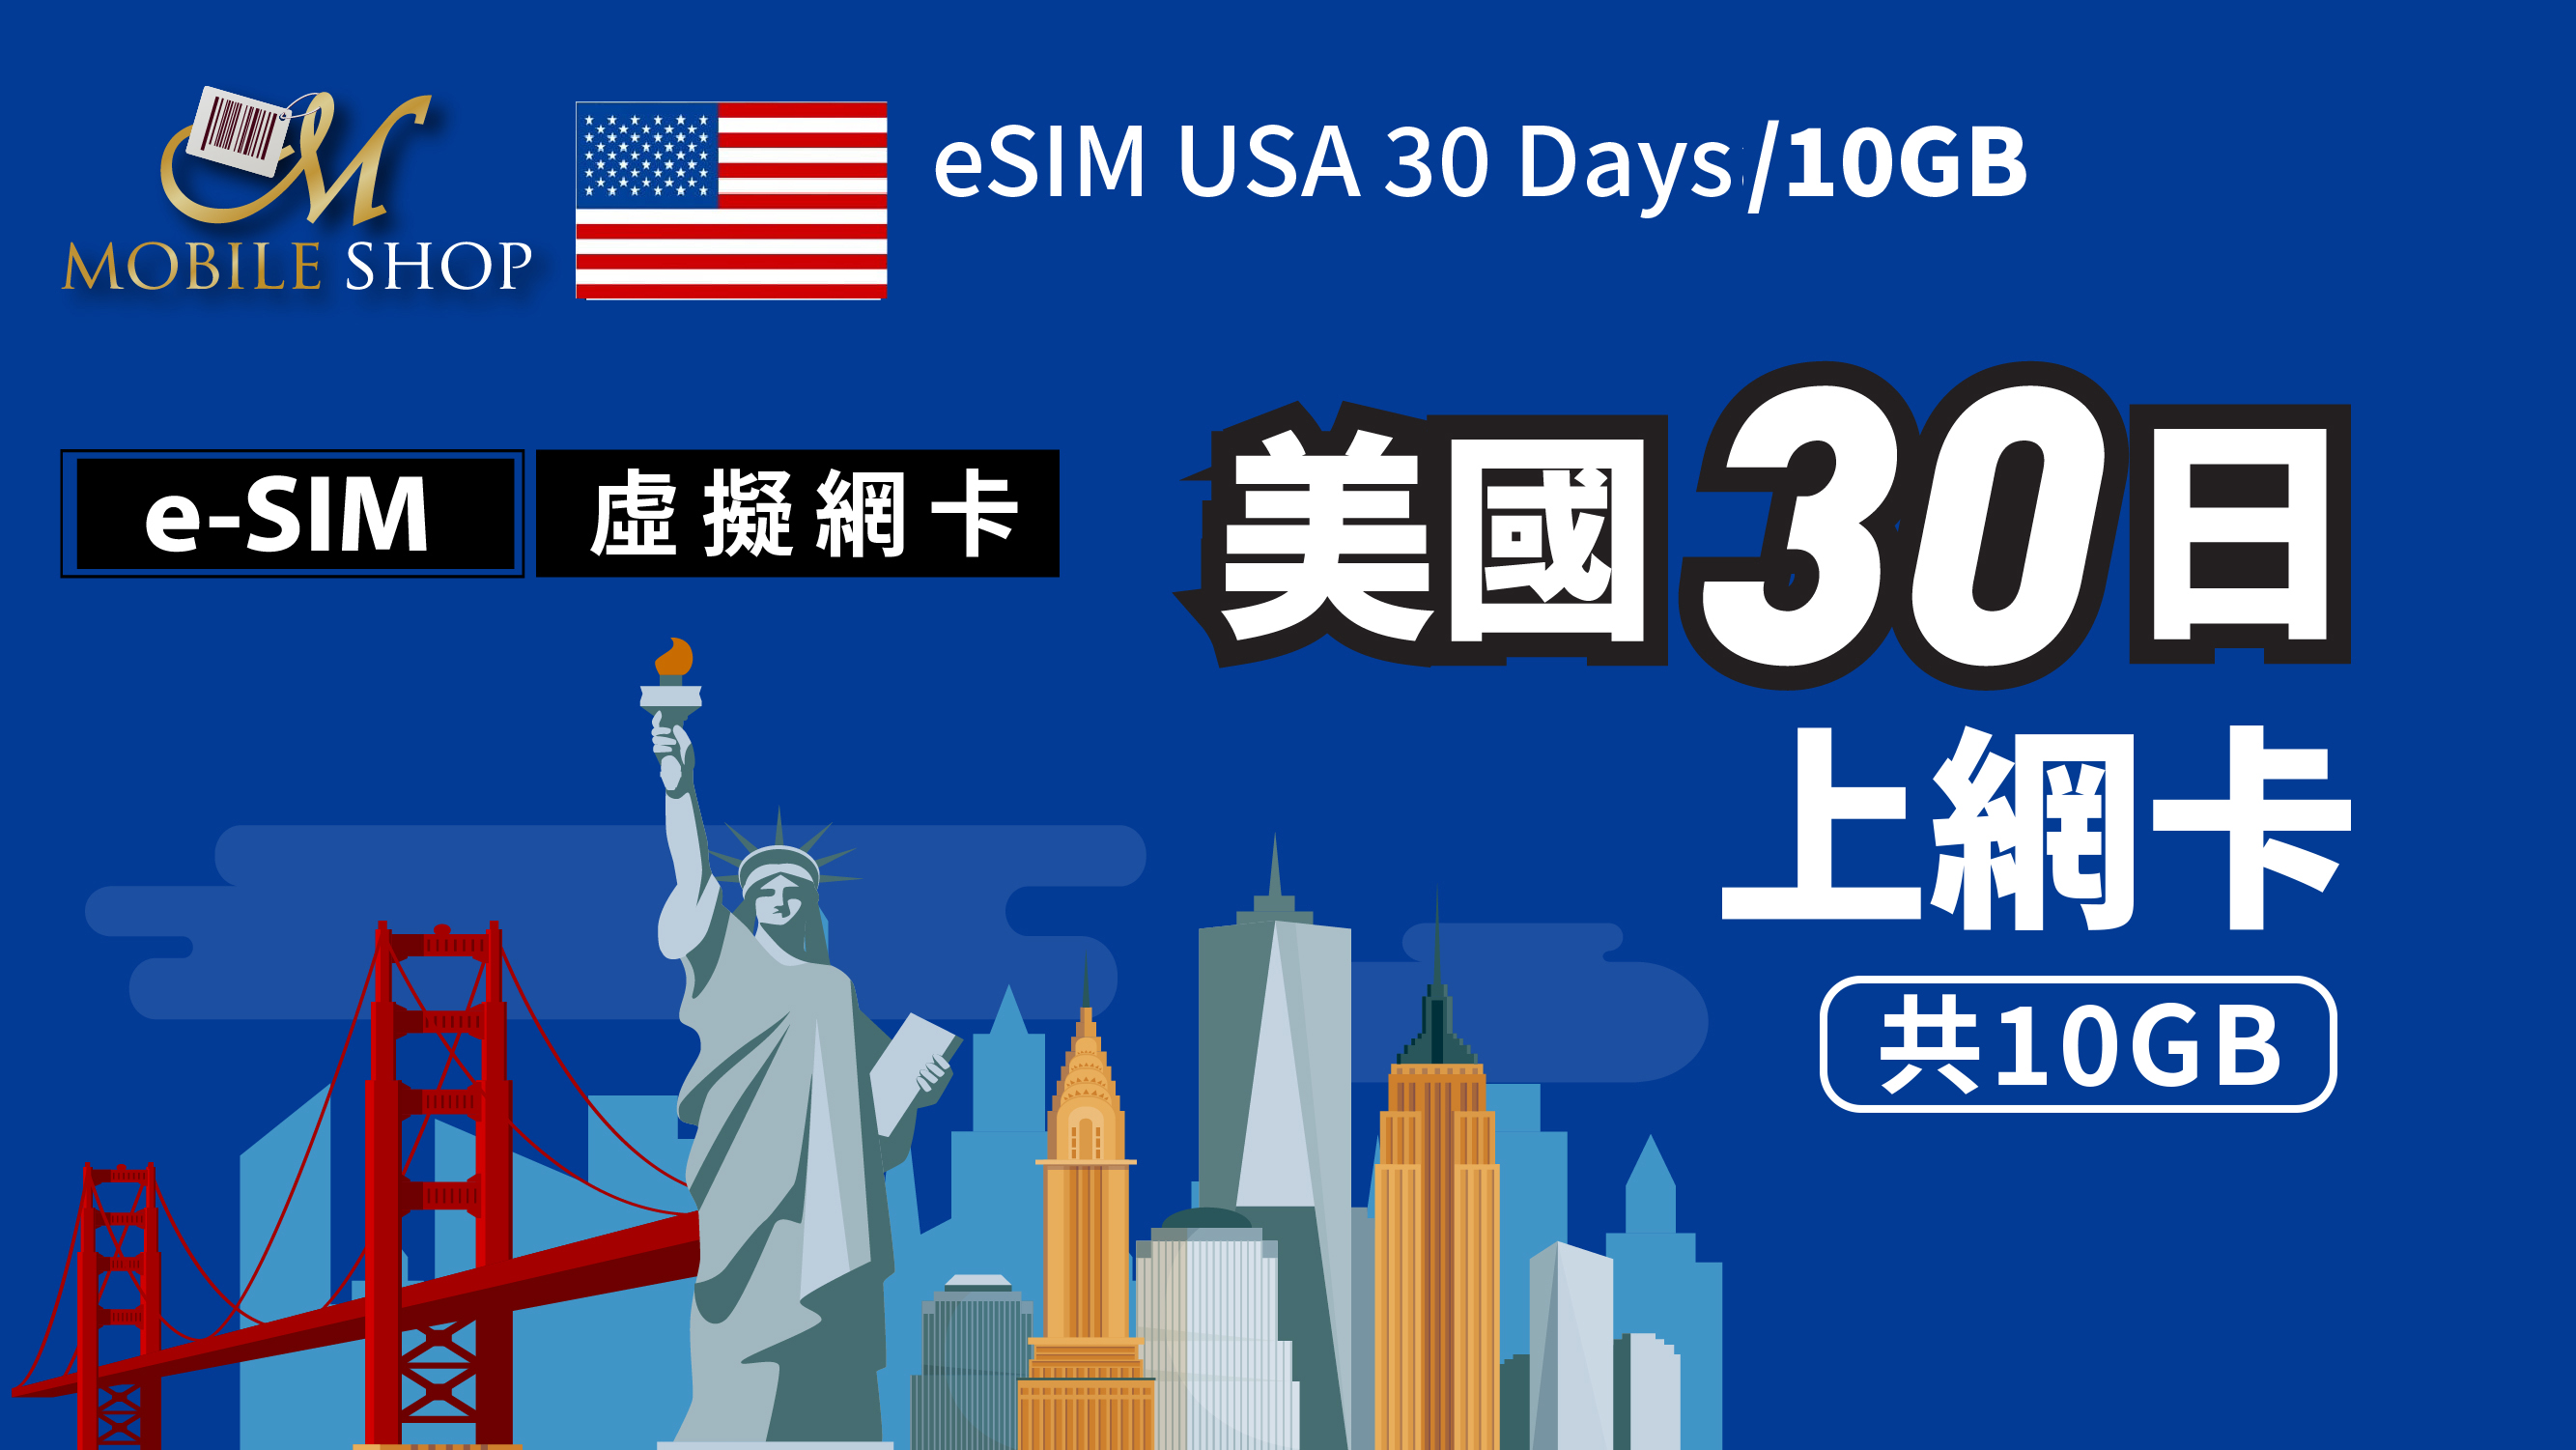 e-SIM_USA 30 days/10GB unlimited data